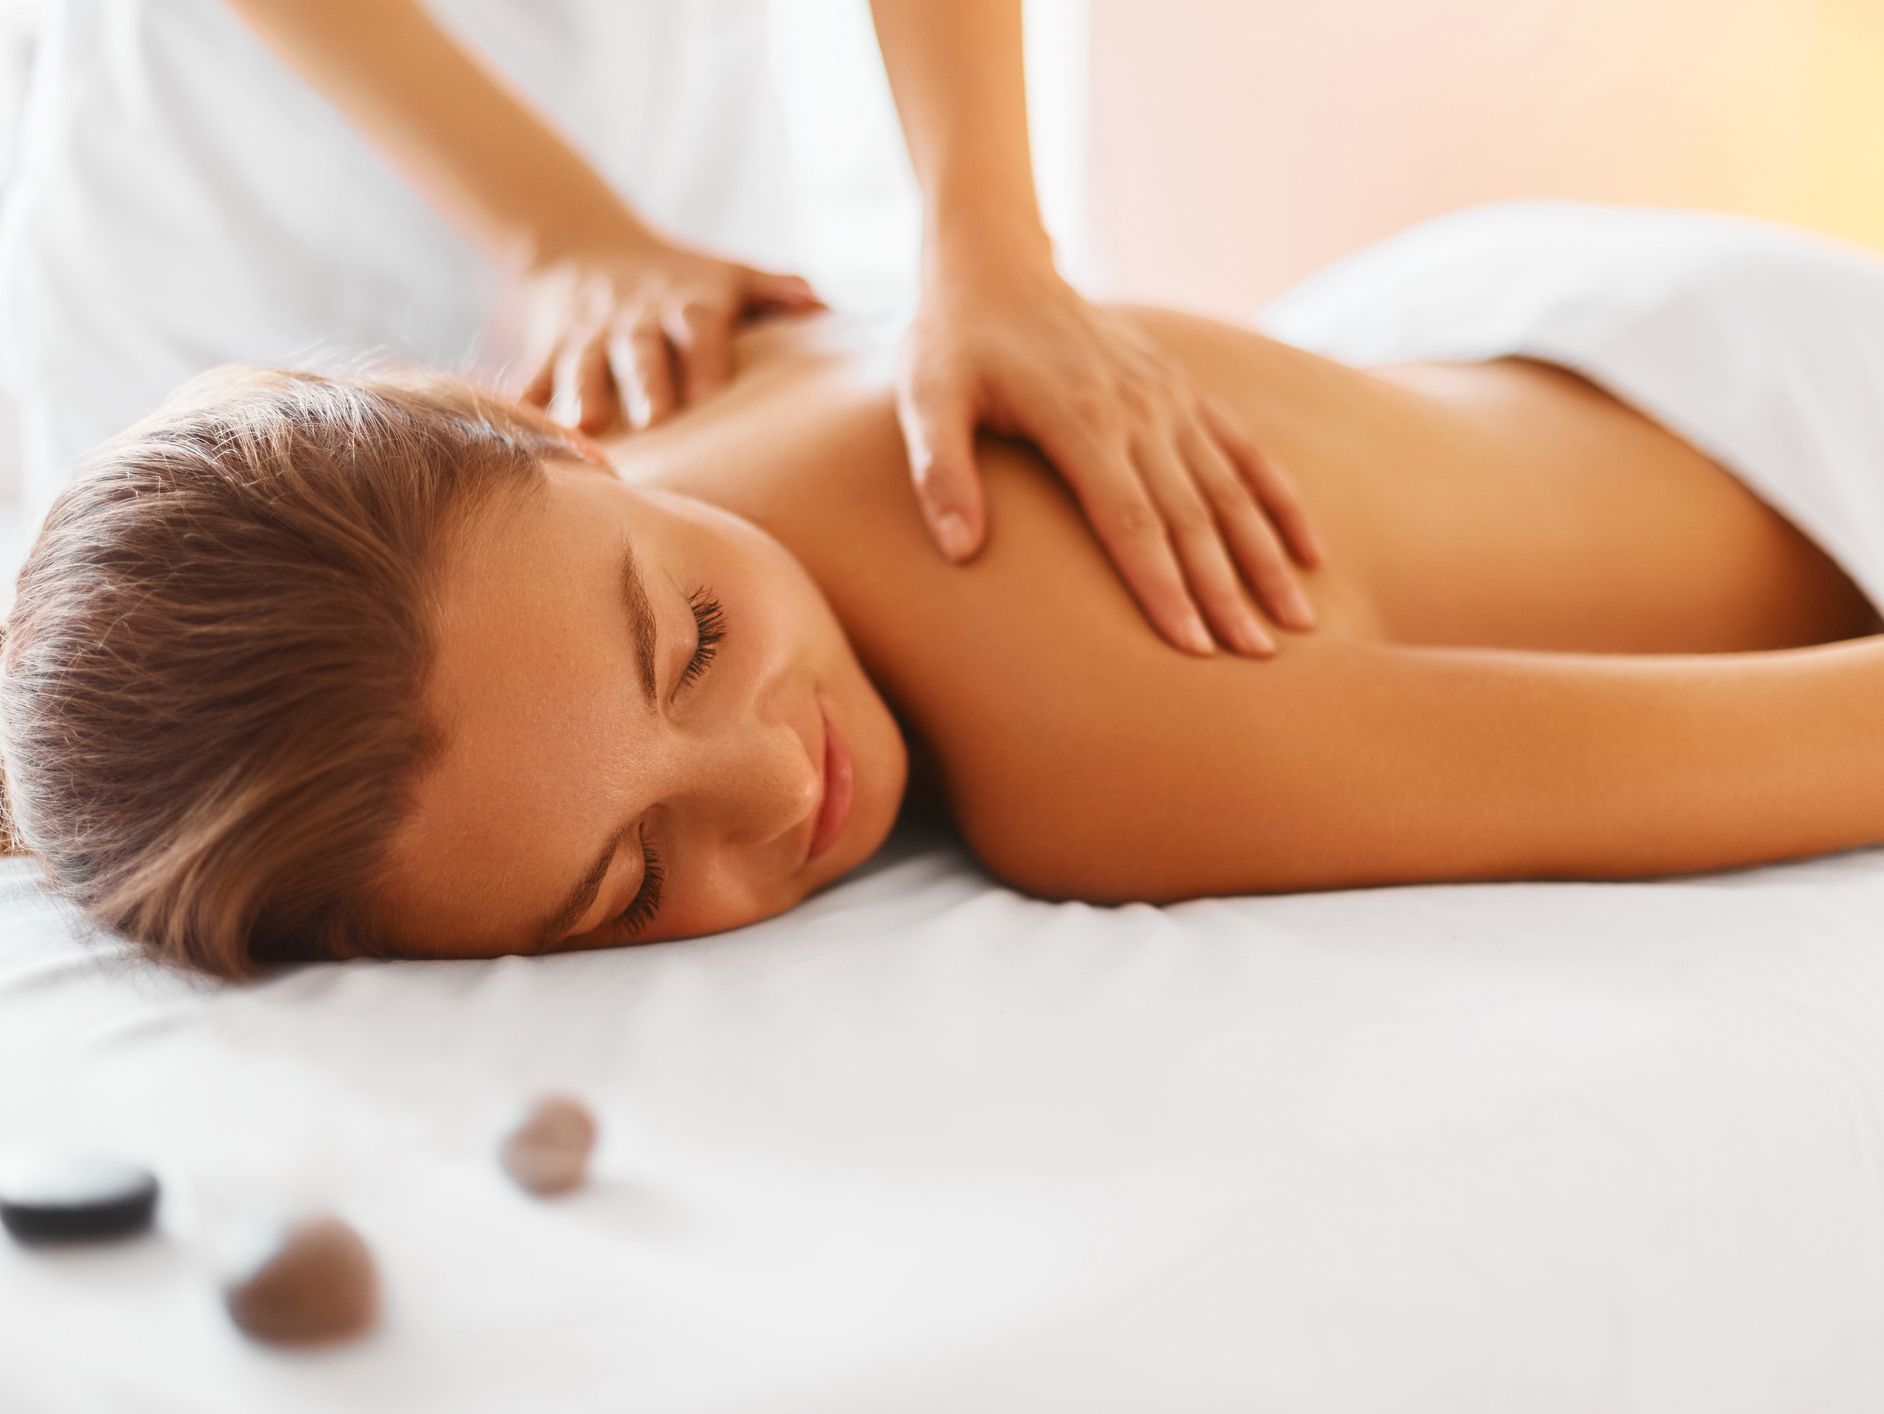 divya gambhir recommends all girl massage room pic